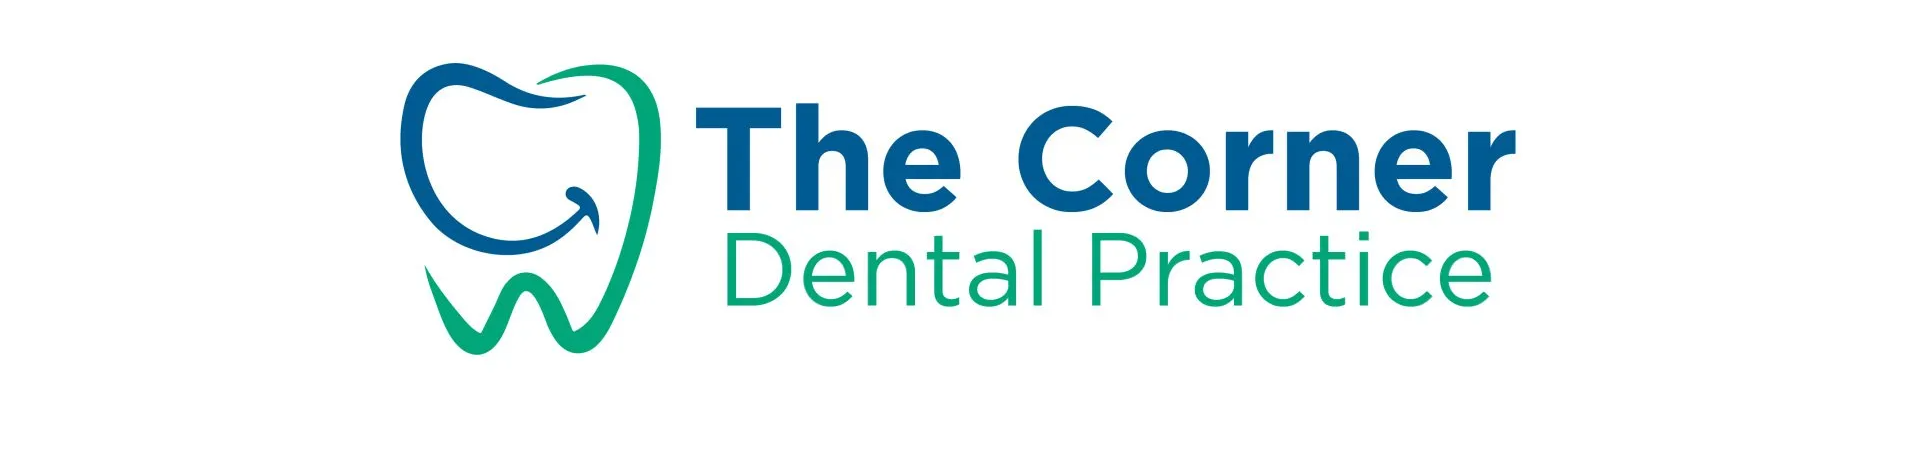 The Corner Dental Practice company logo